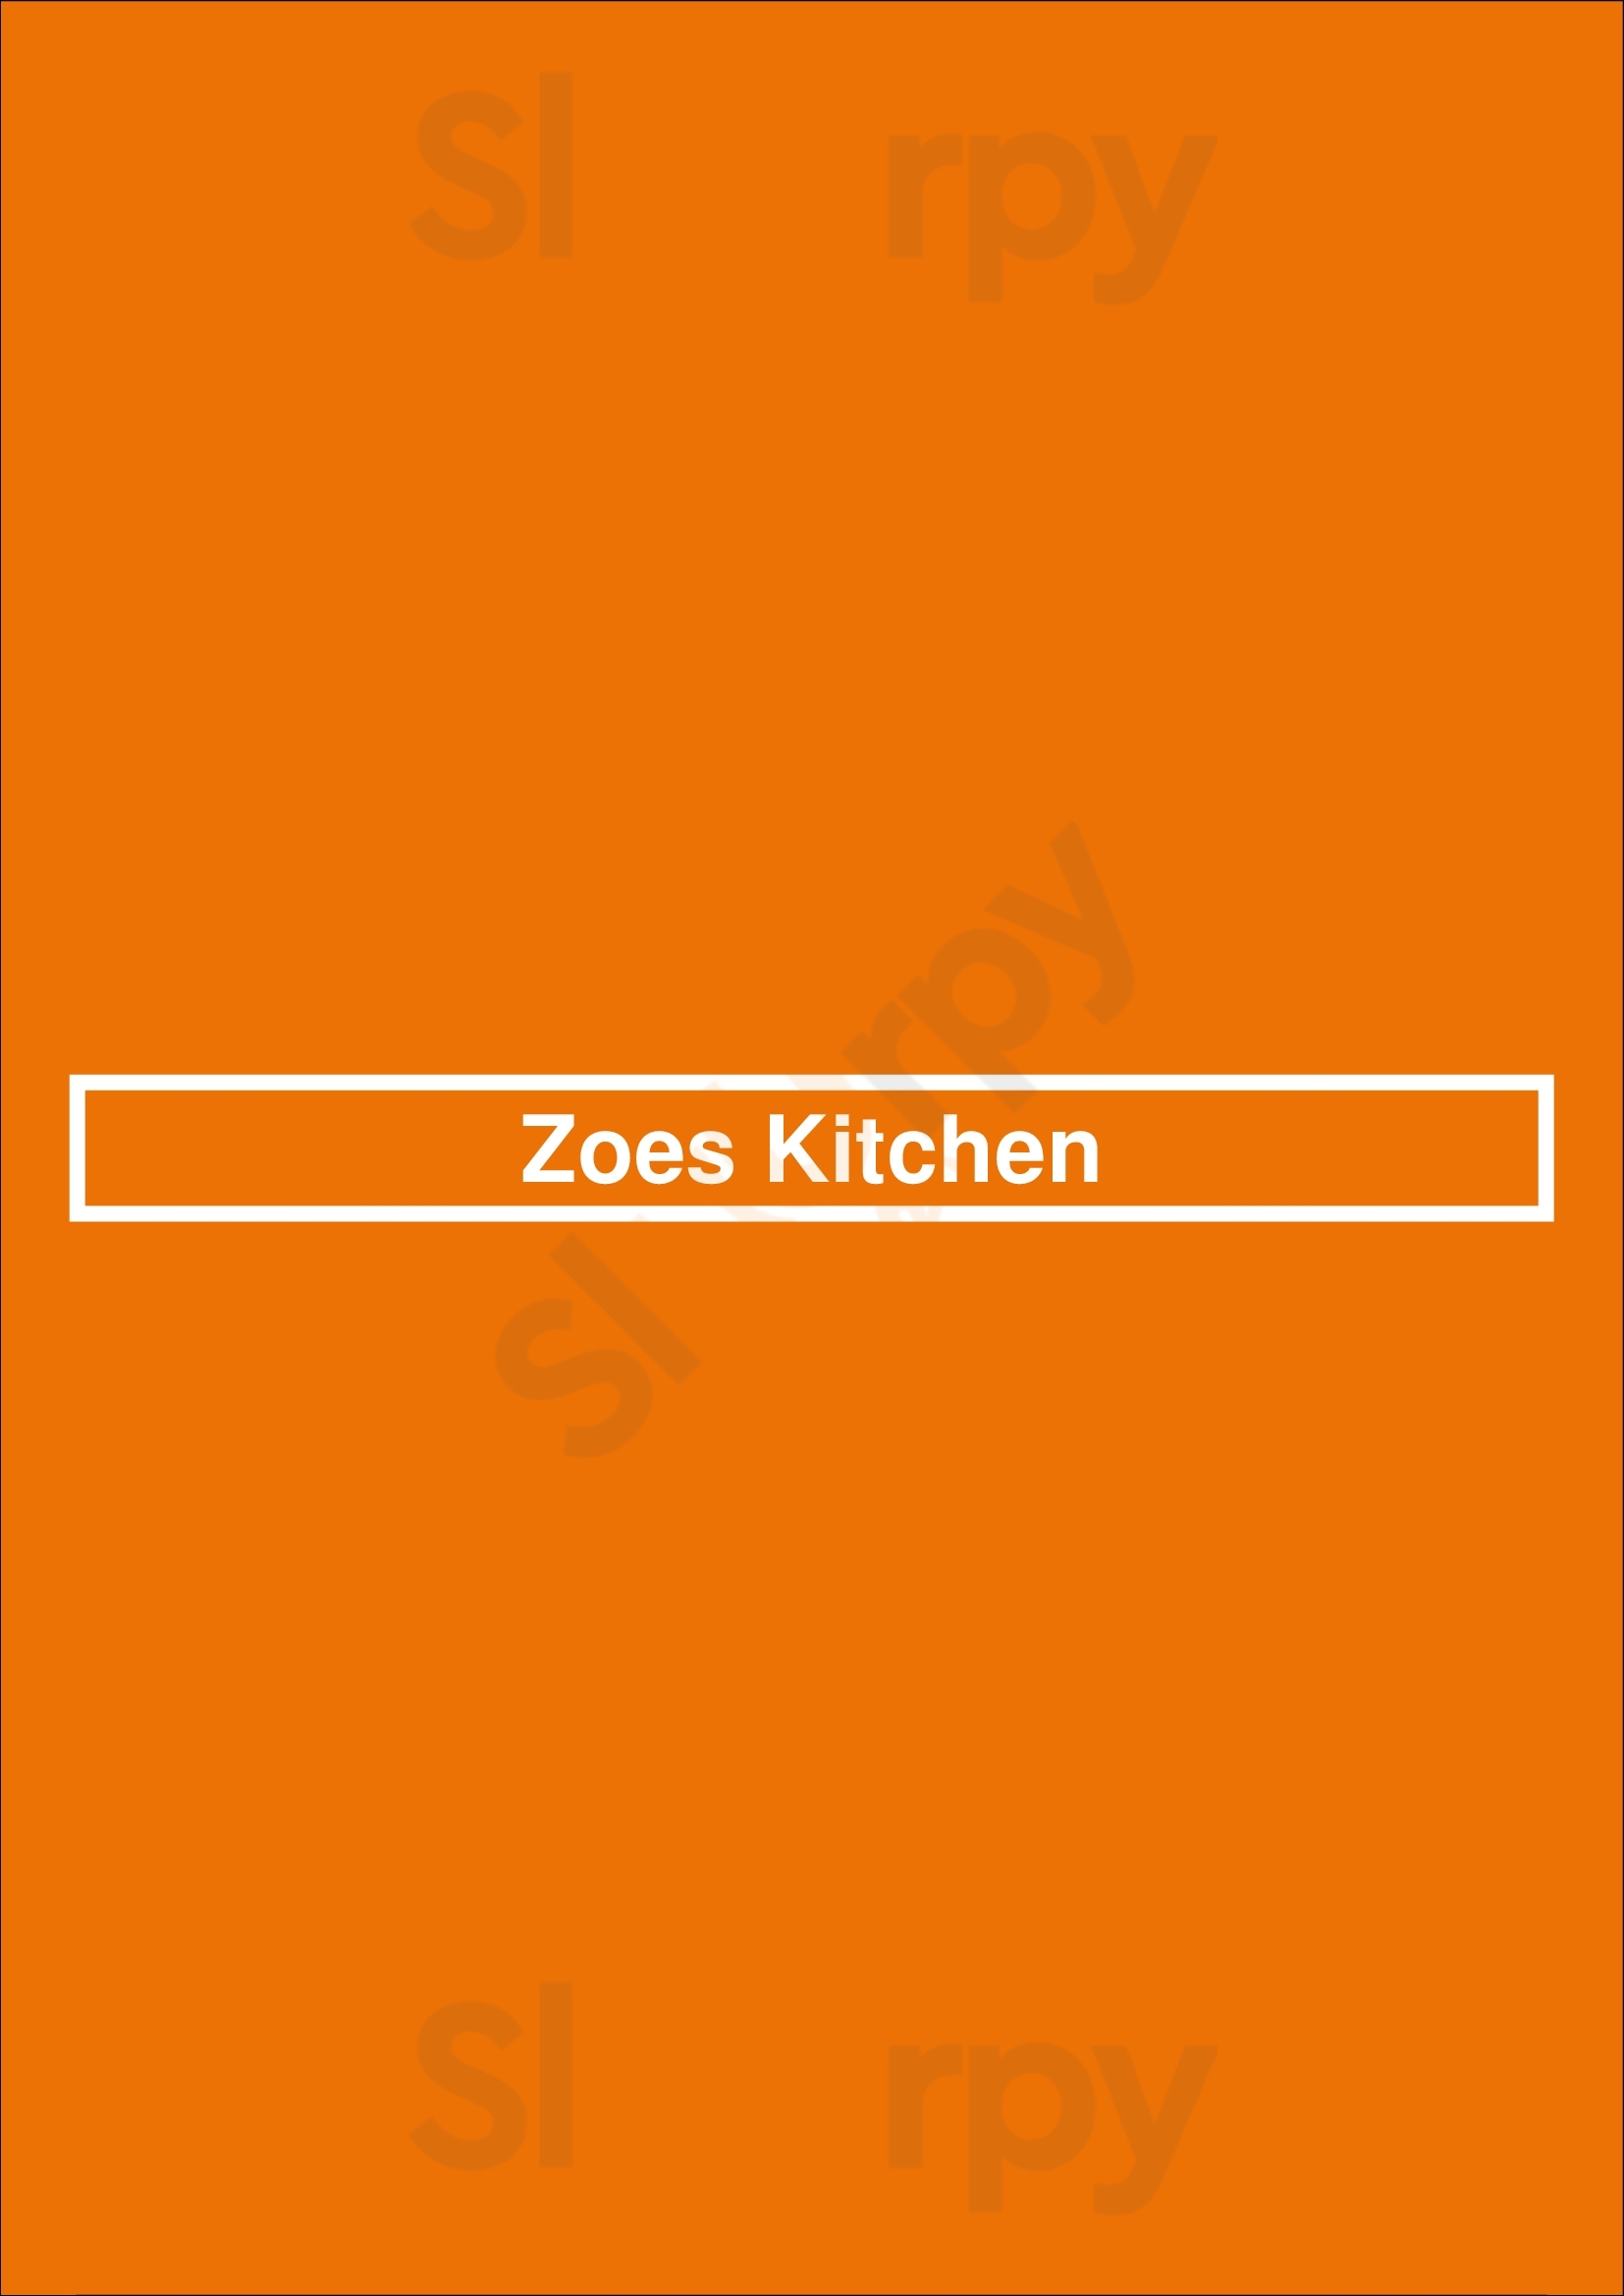 Zoe's Kitchen Greenville Menu - 1